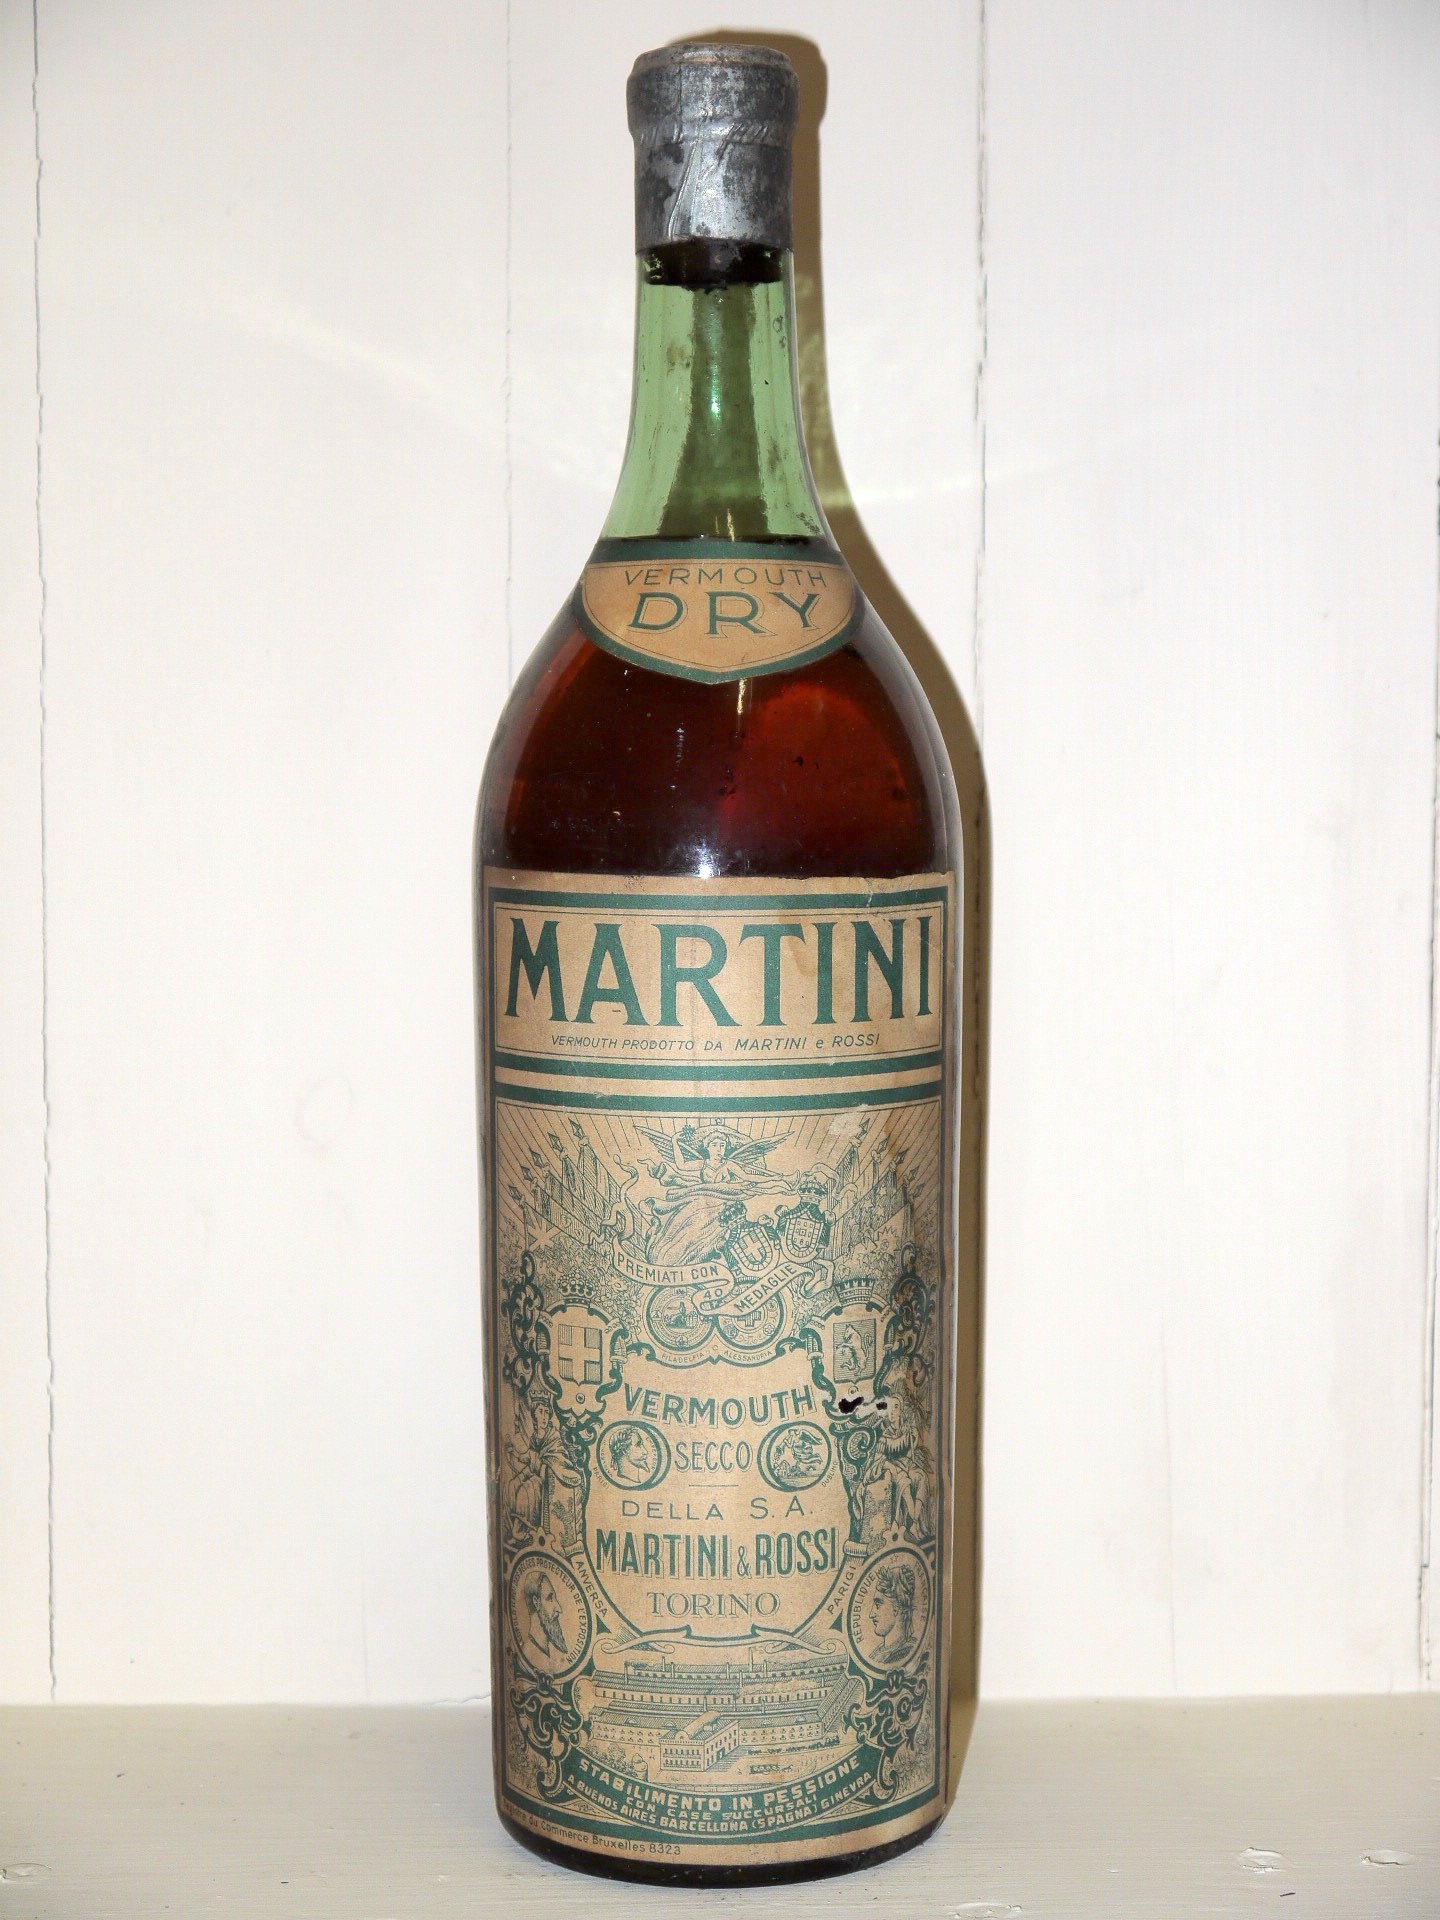 Vermouth Dry Martini - great wine Vermouth Au Droit de Bouchon